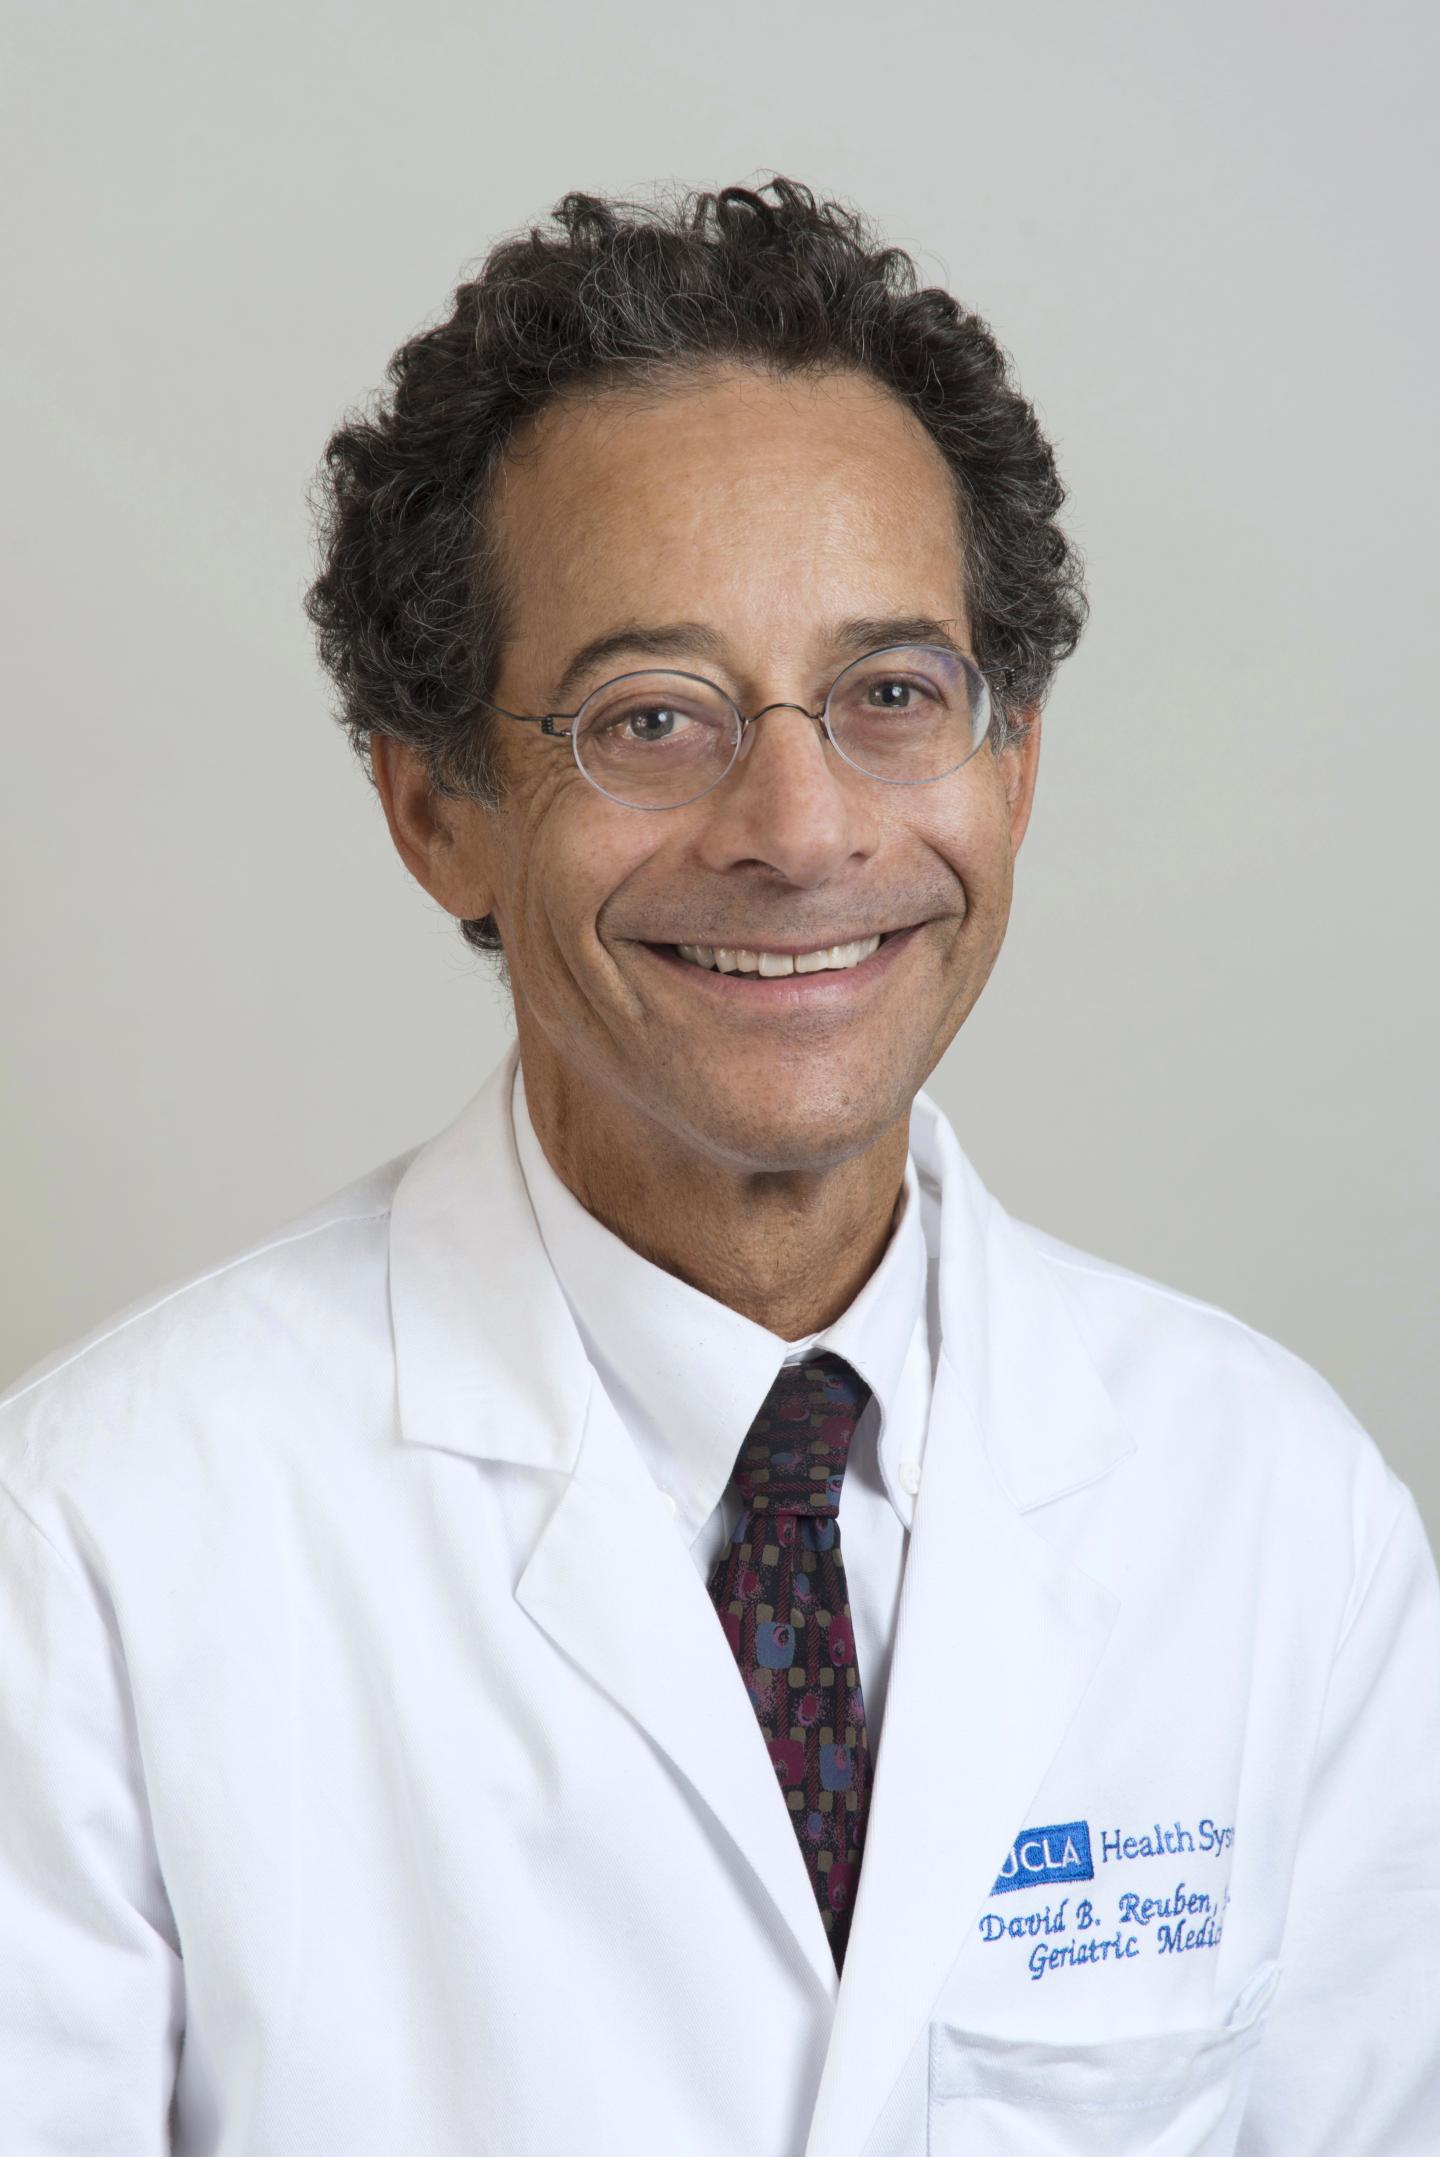 Dr. David Reuben